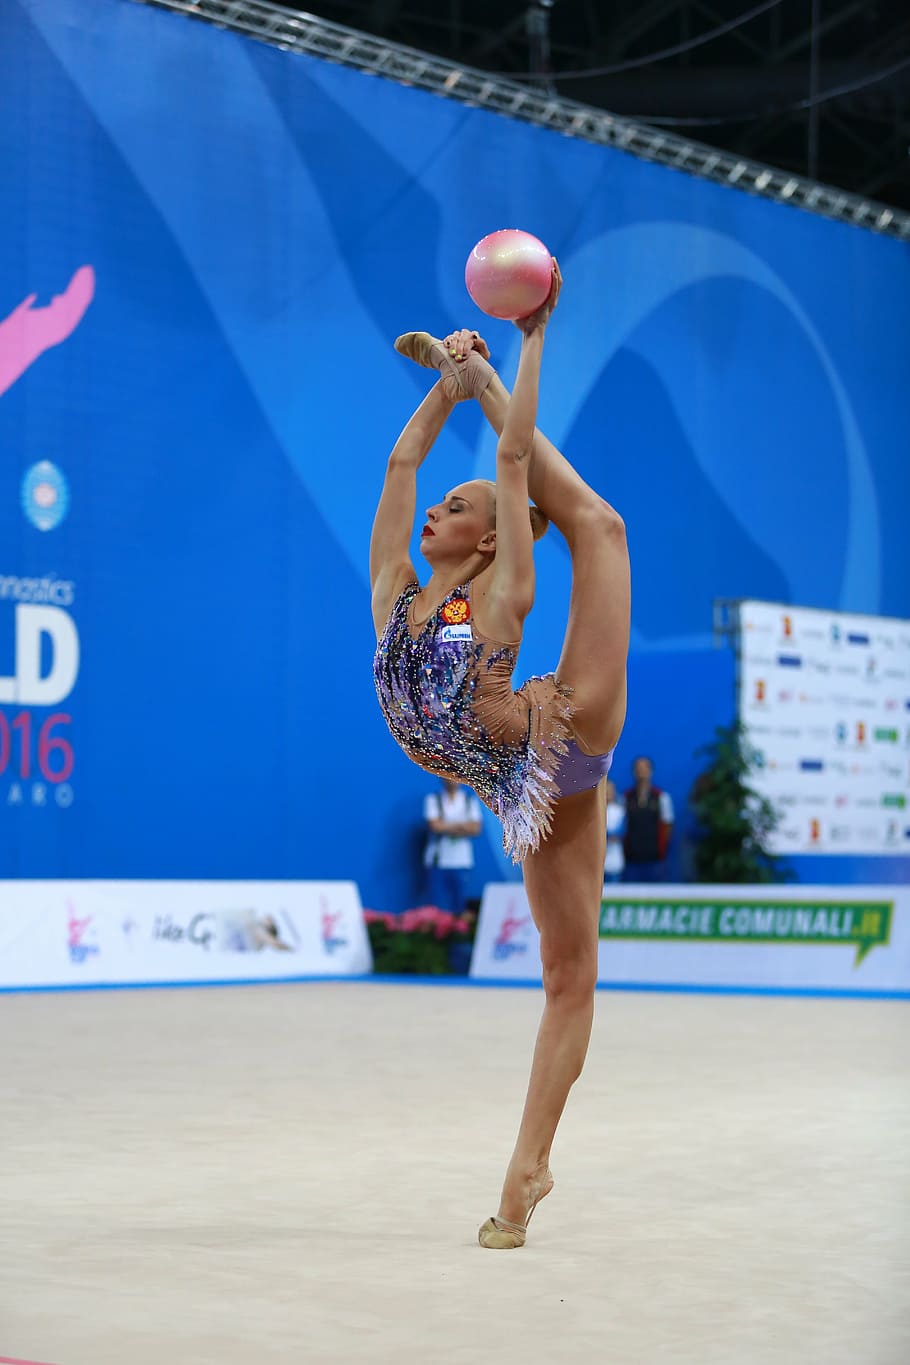 woman doing gymnast, gymnast, gymnastics, rhythmic gymnastics, sport, race, competition, athlete, physical activity, indoor